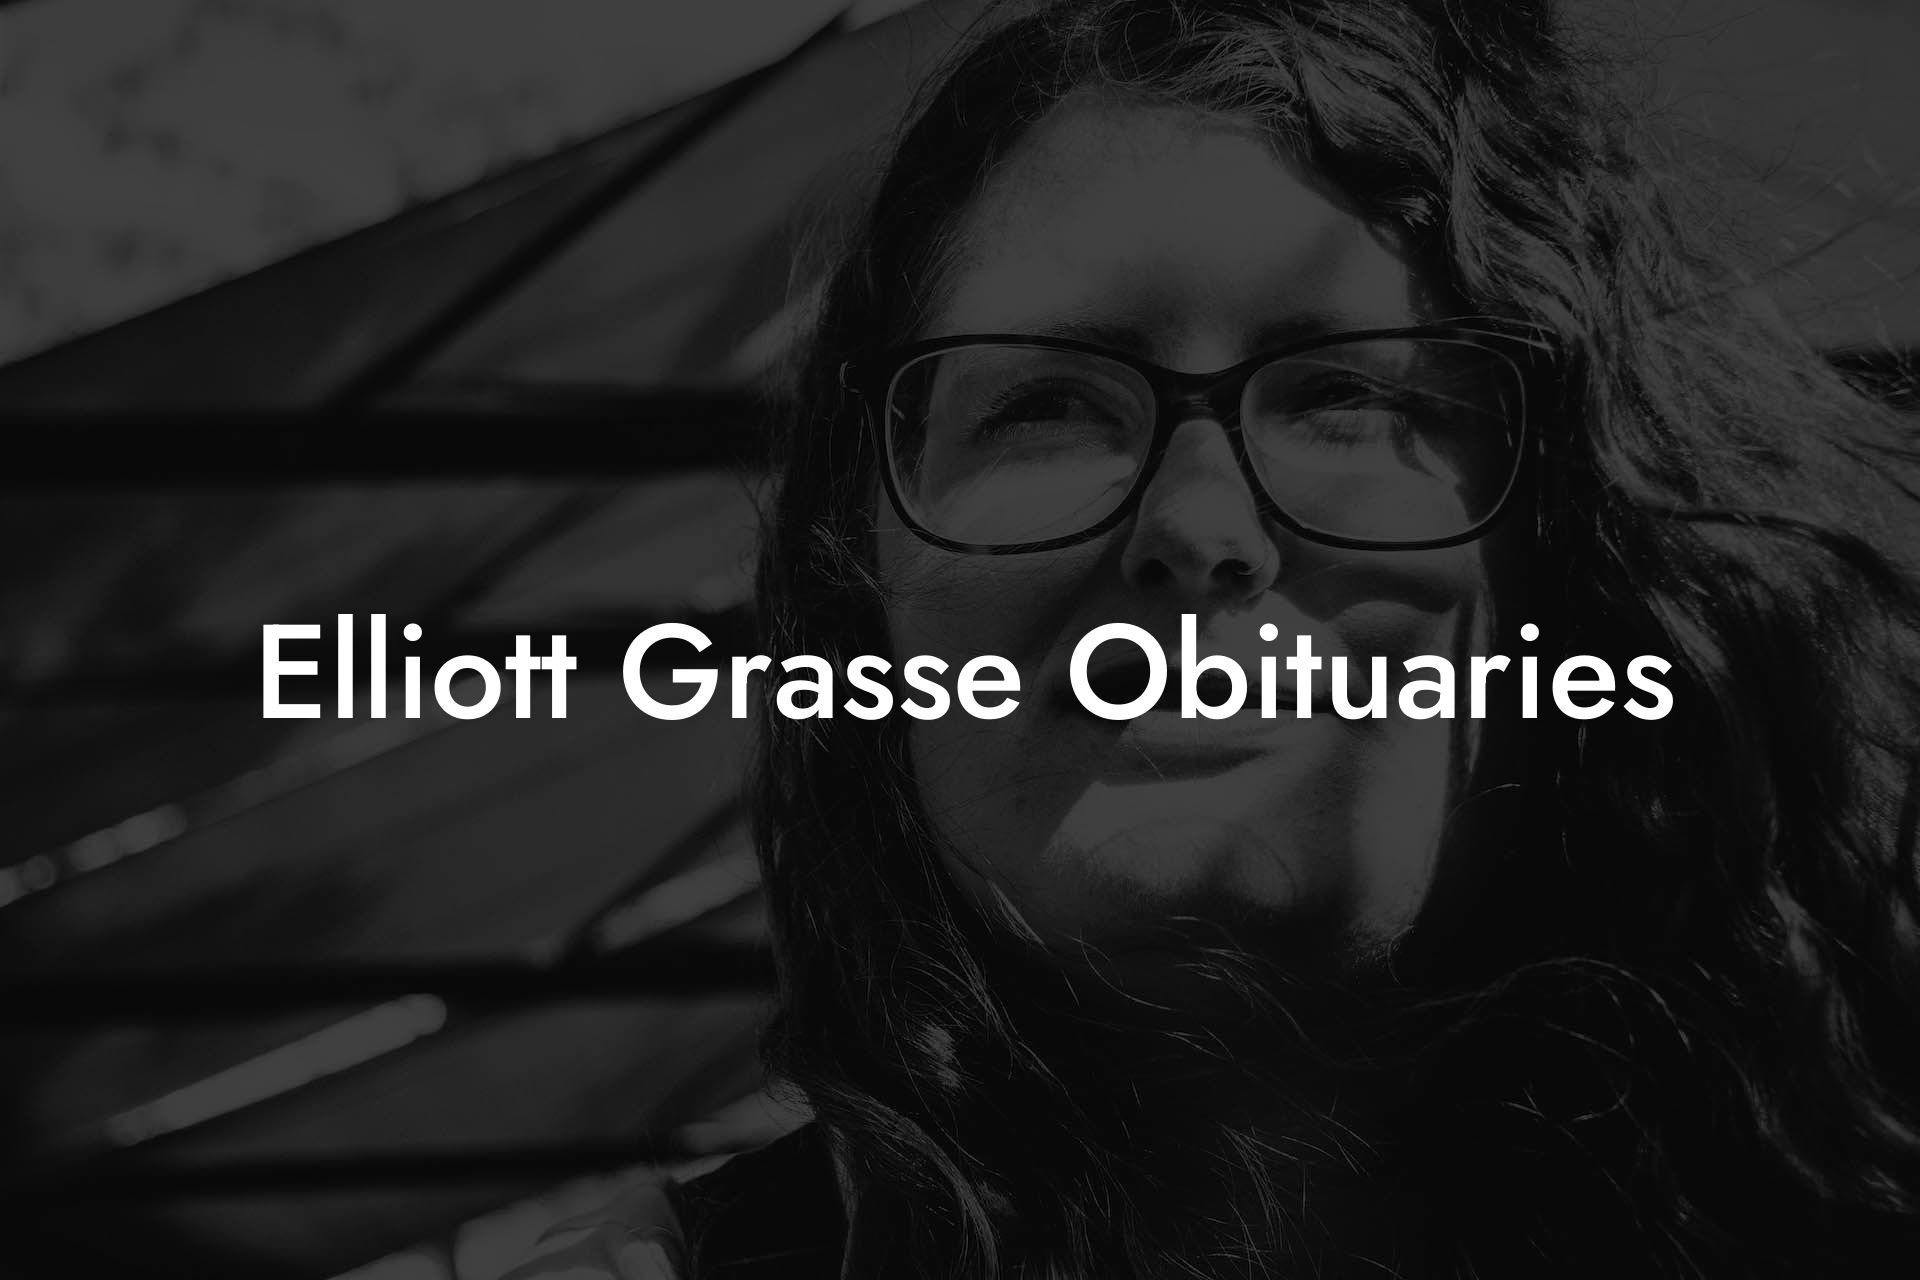 Elliott Grasse Obituaries